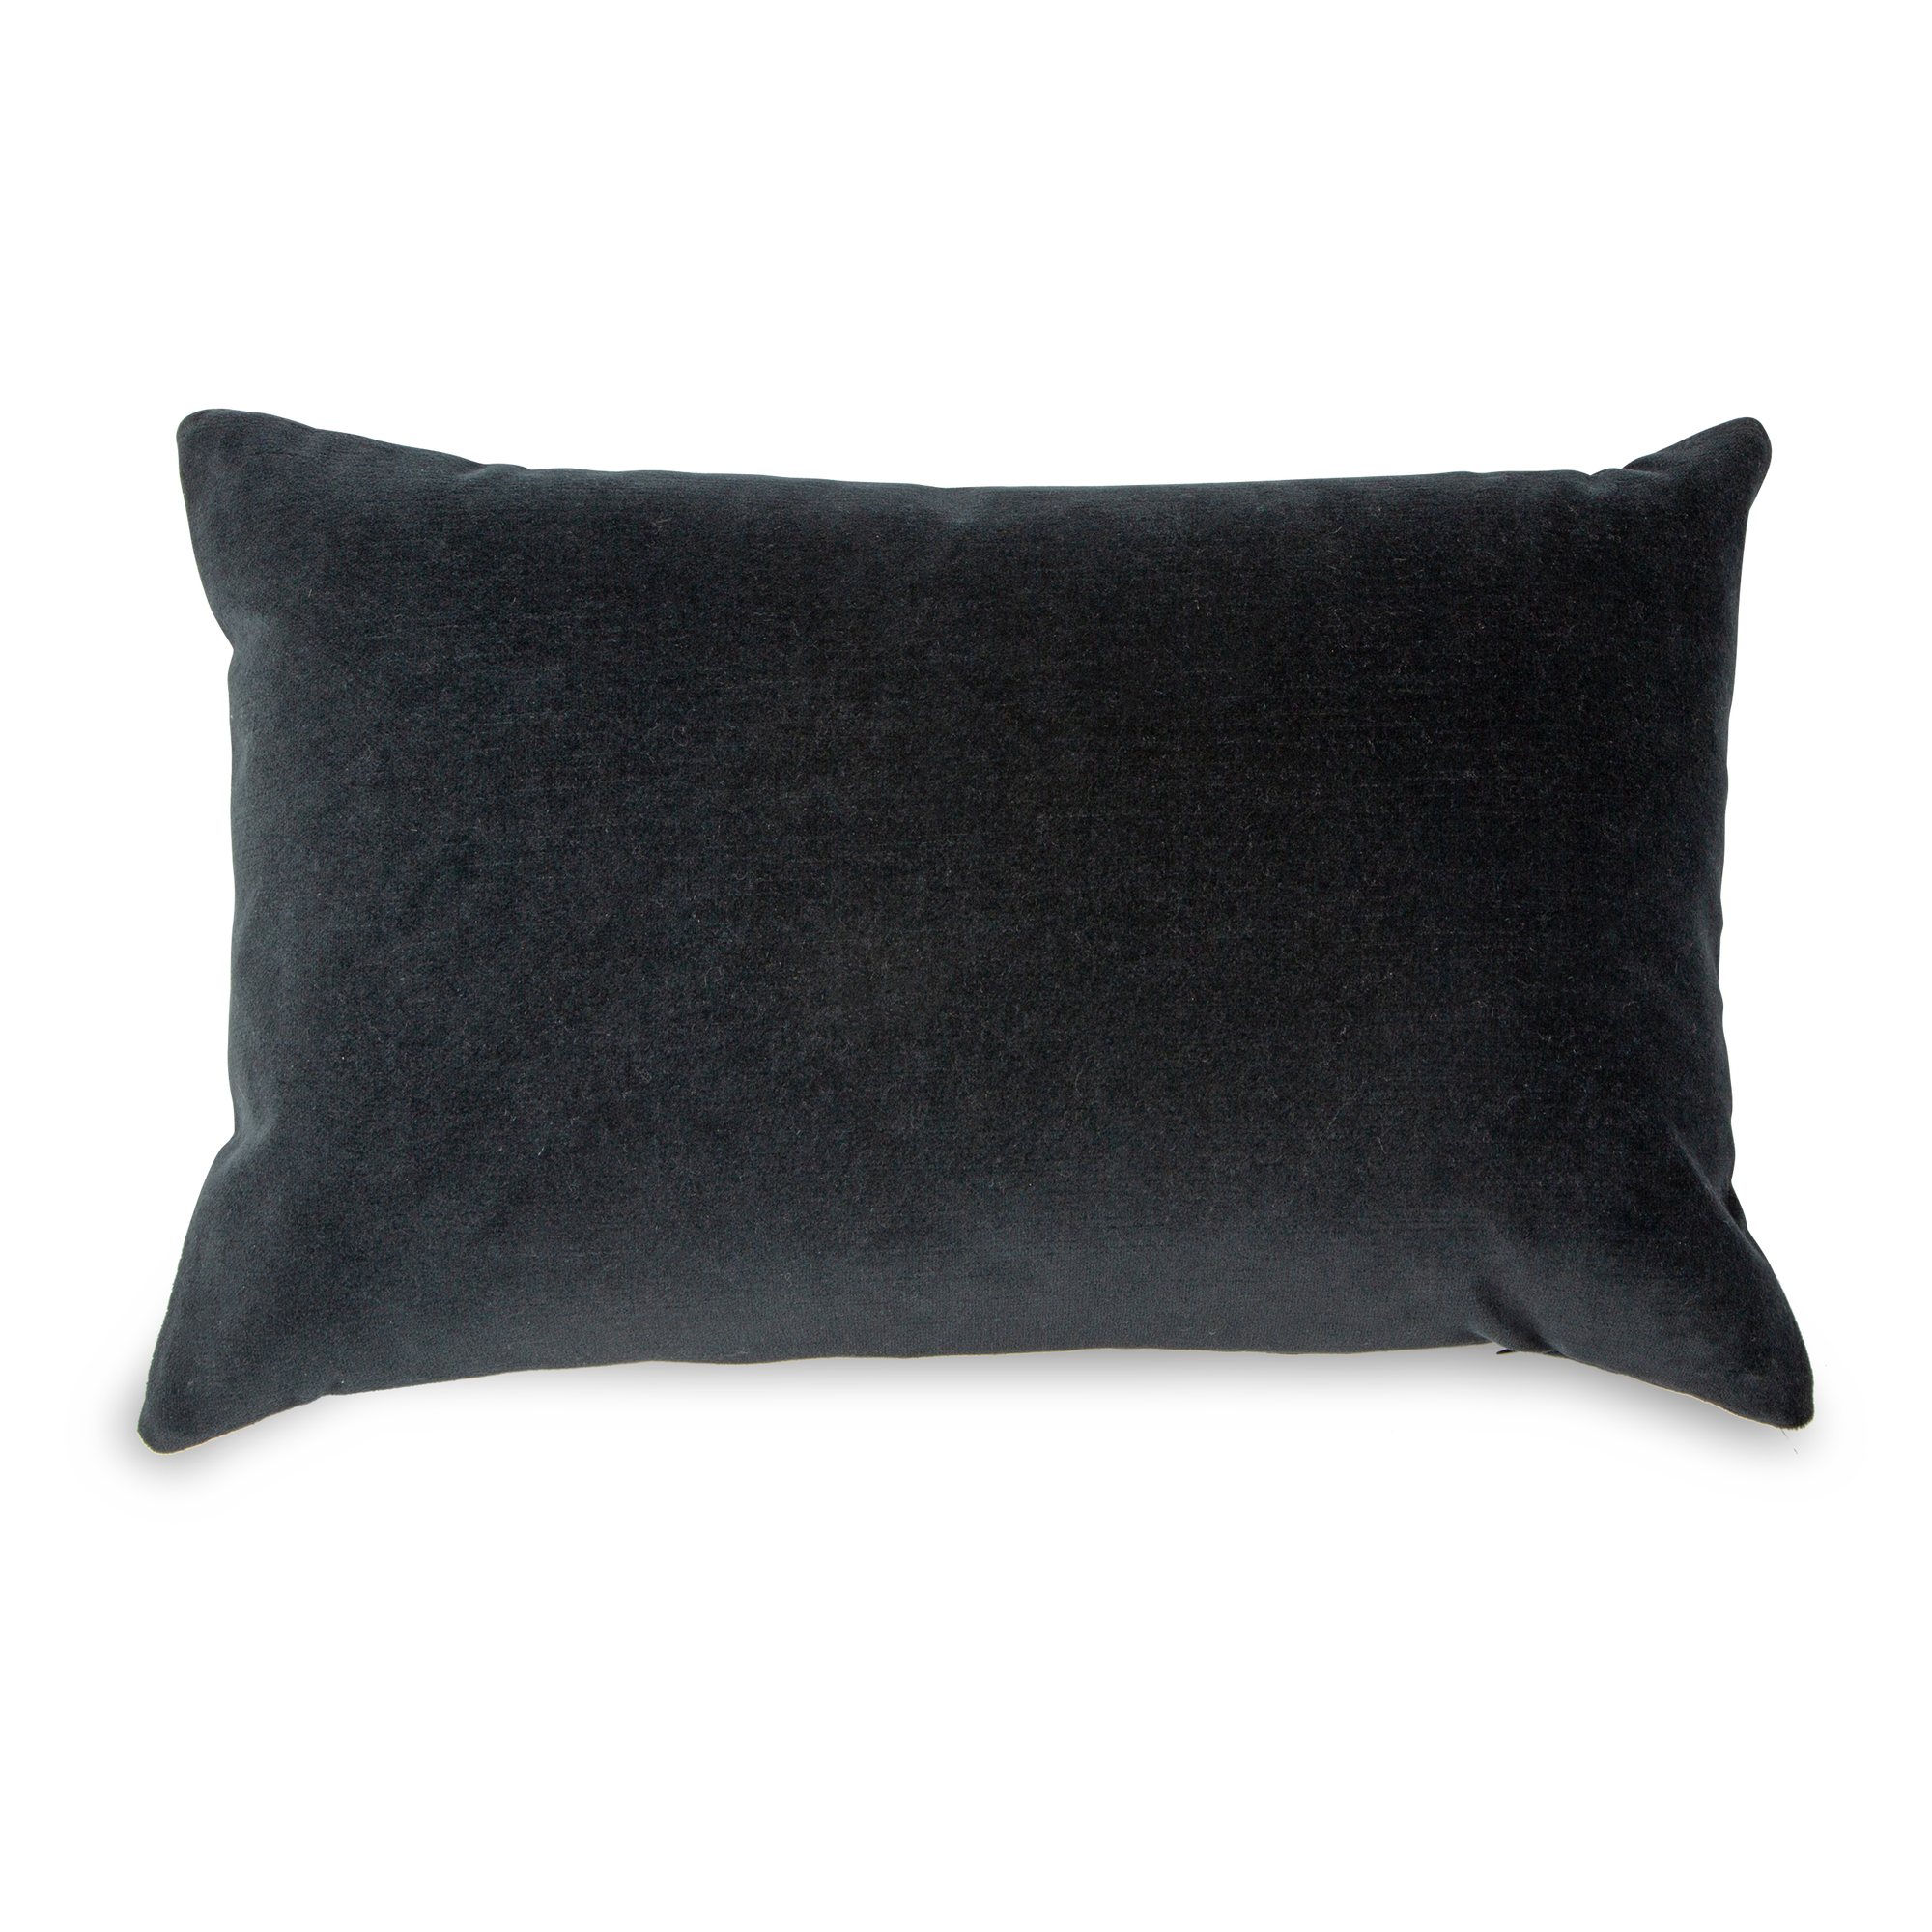 An elegant velvet pillow with gentle striation that creates subtle dimensions.